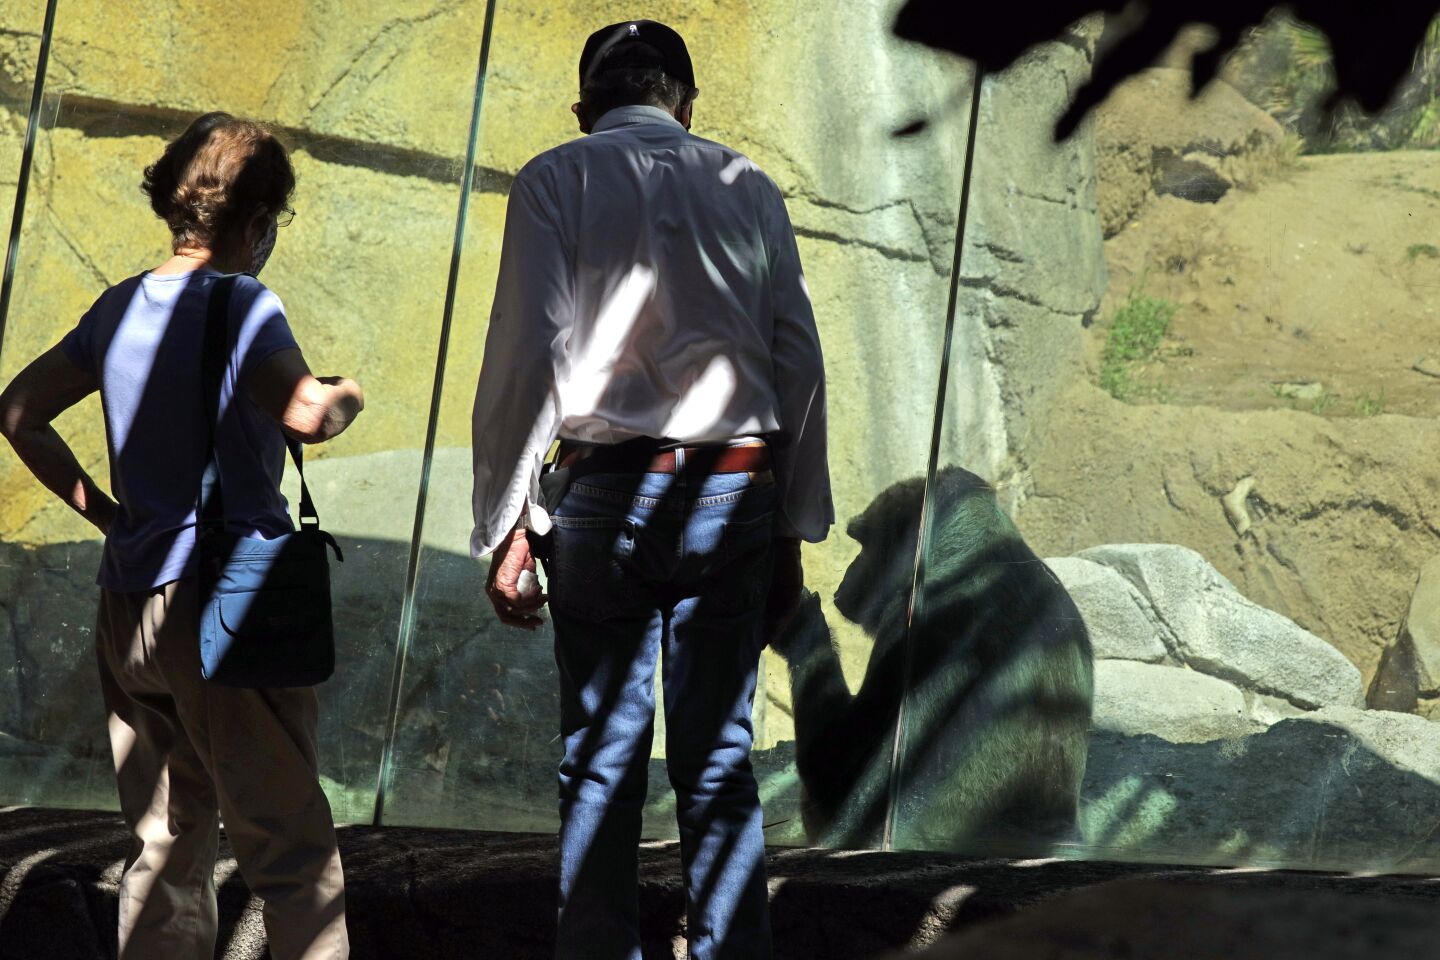 Visitors stop by the gorilla enclosure